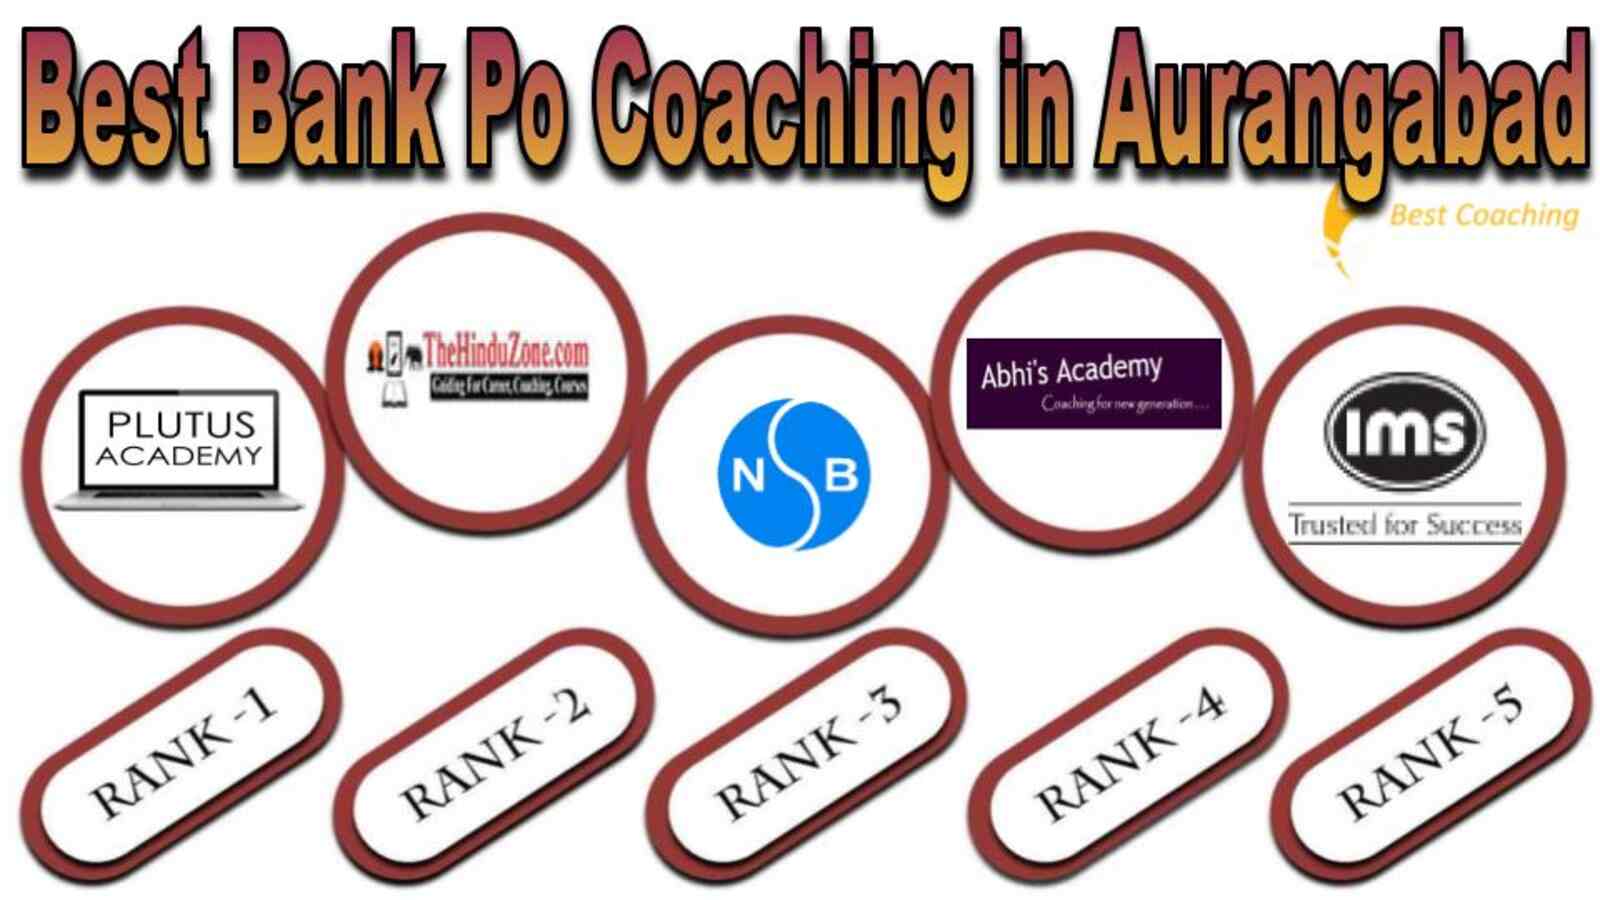 BEST BANK PO COACHING IN AURANGABAD